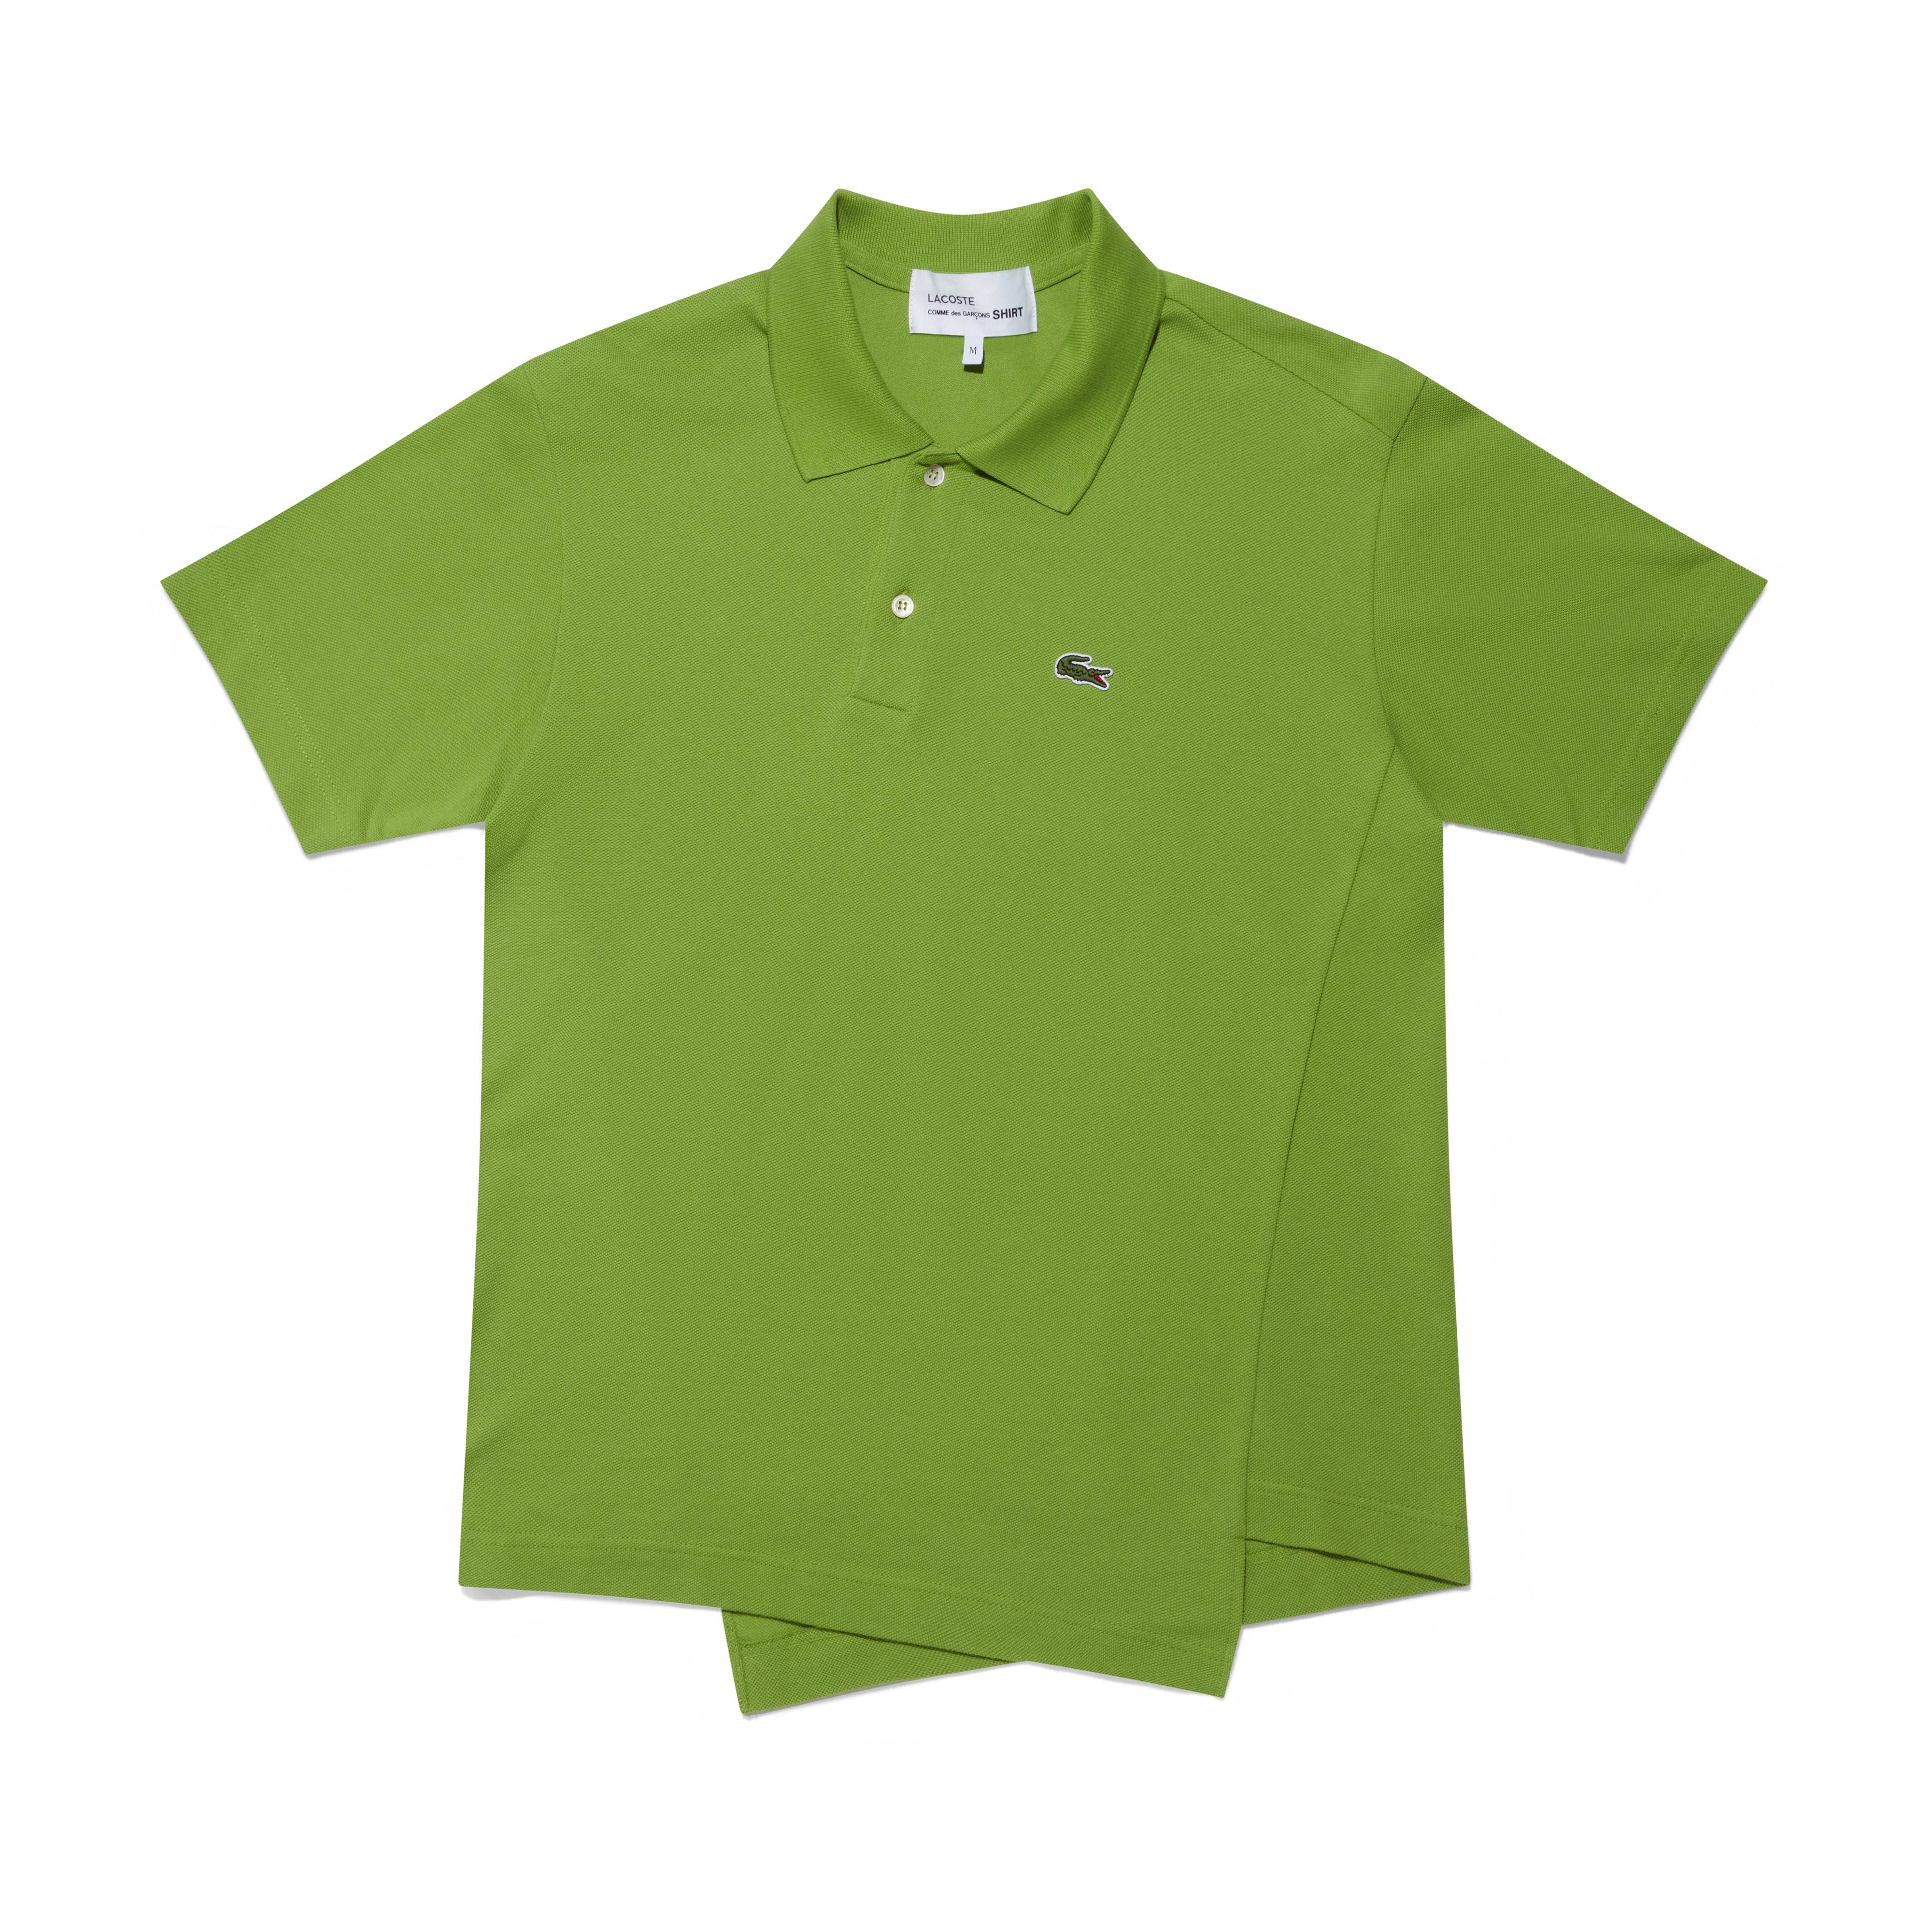 CDG Shirt - Lacoste Men’s Polo Shirt - (Green)